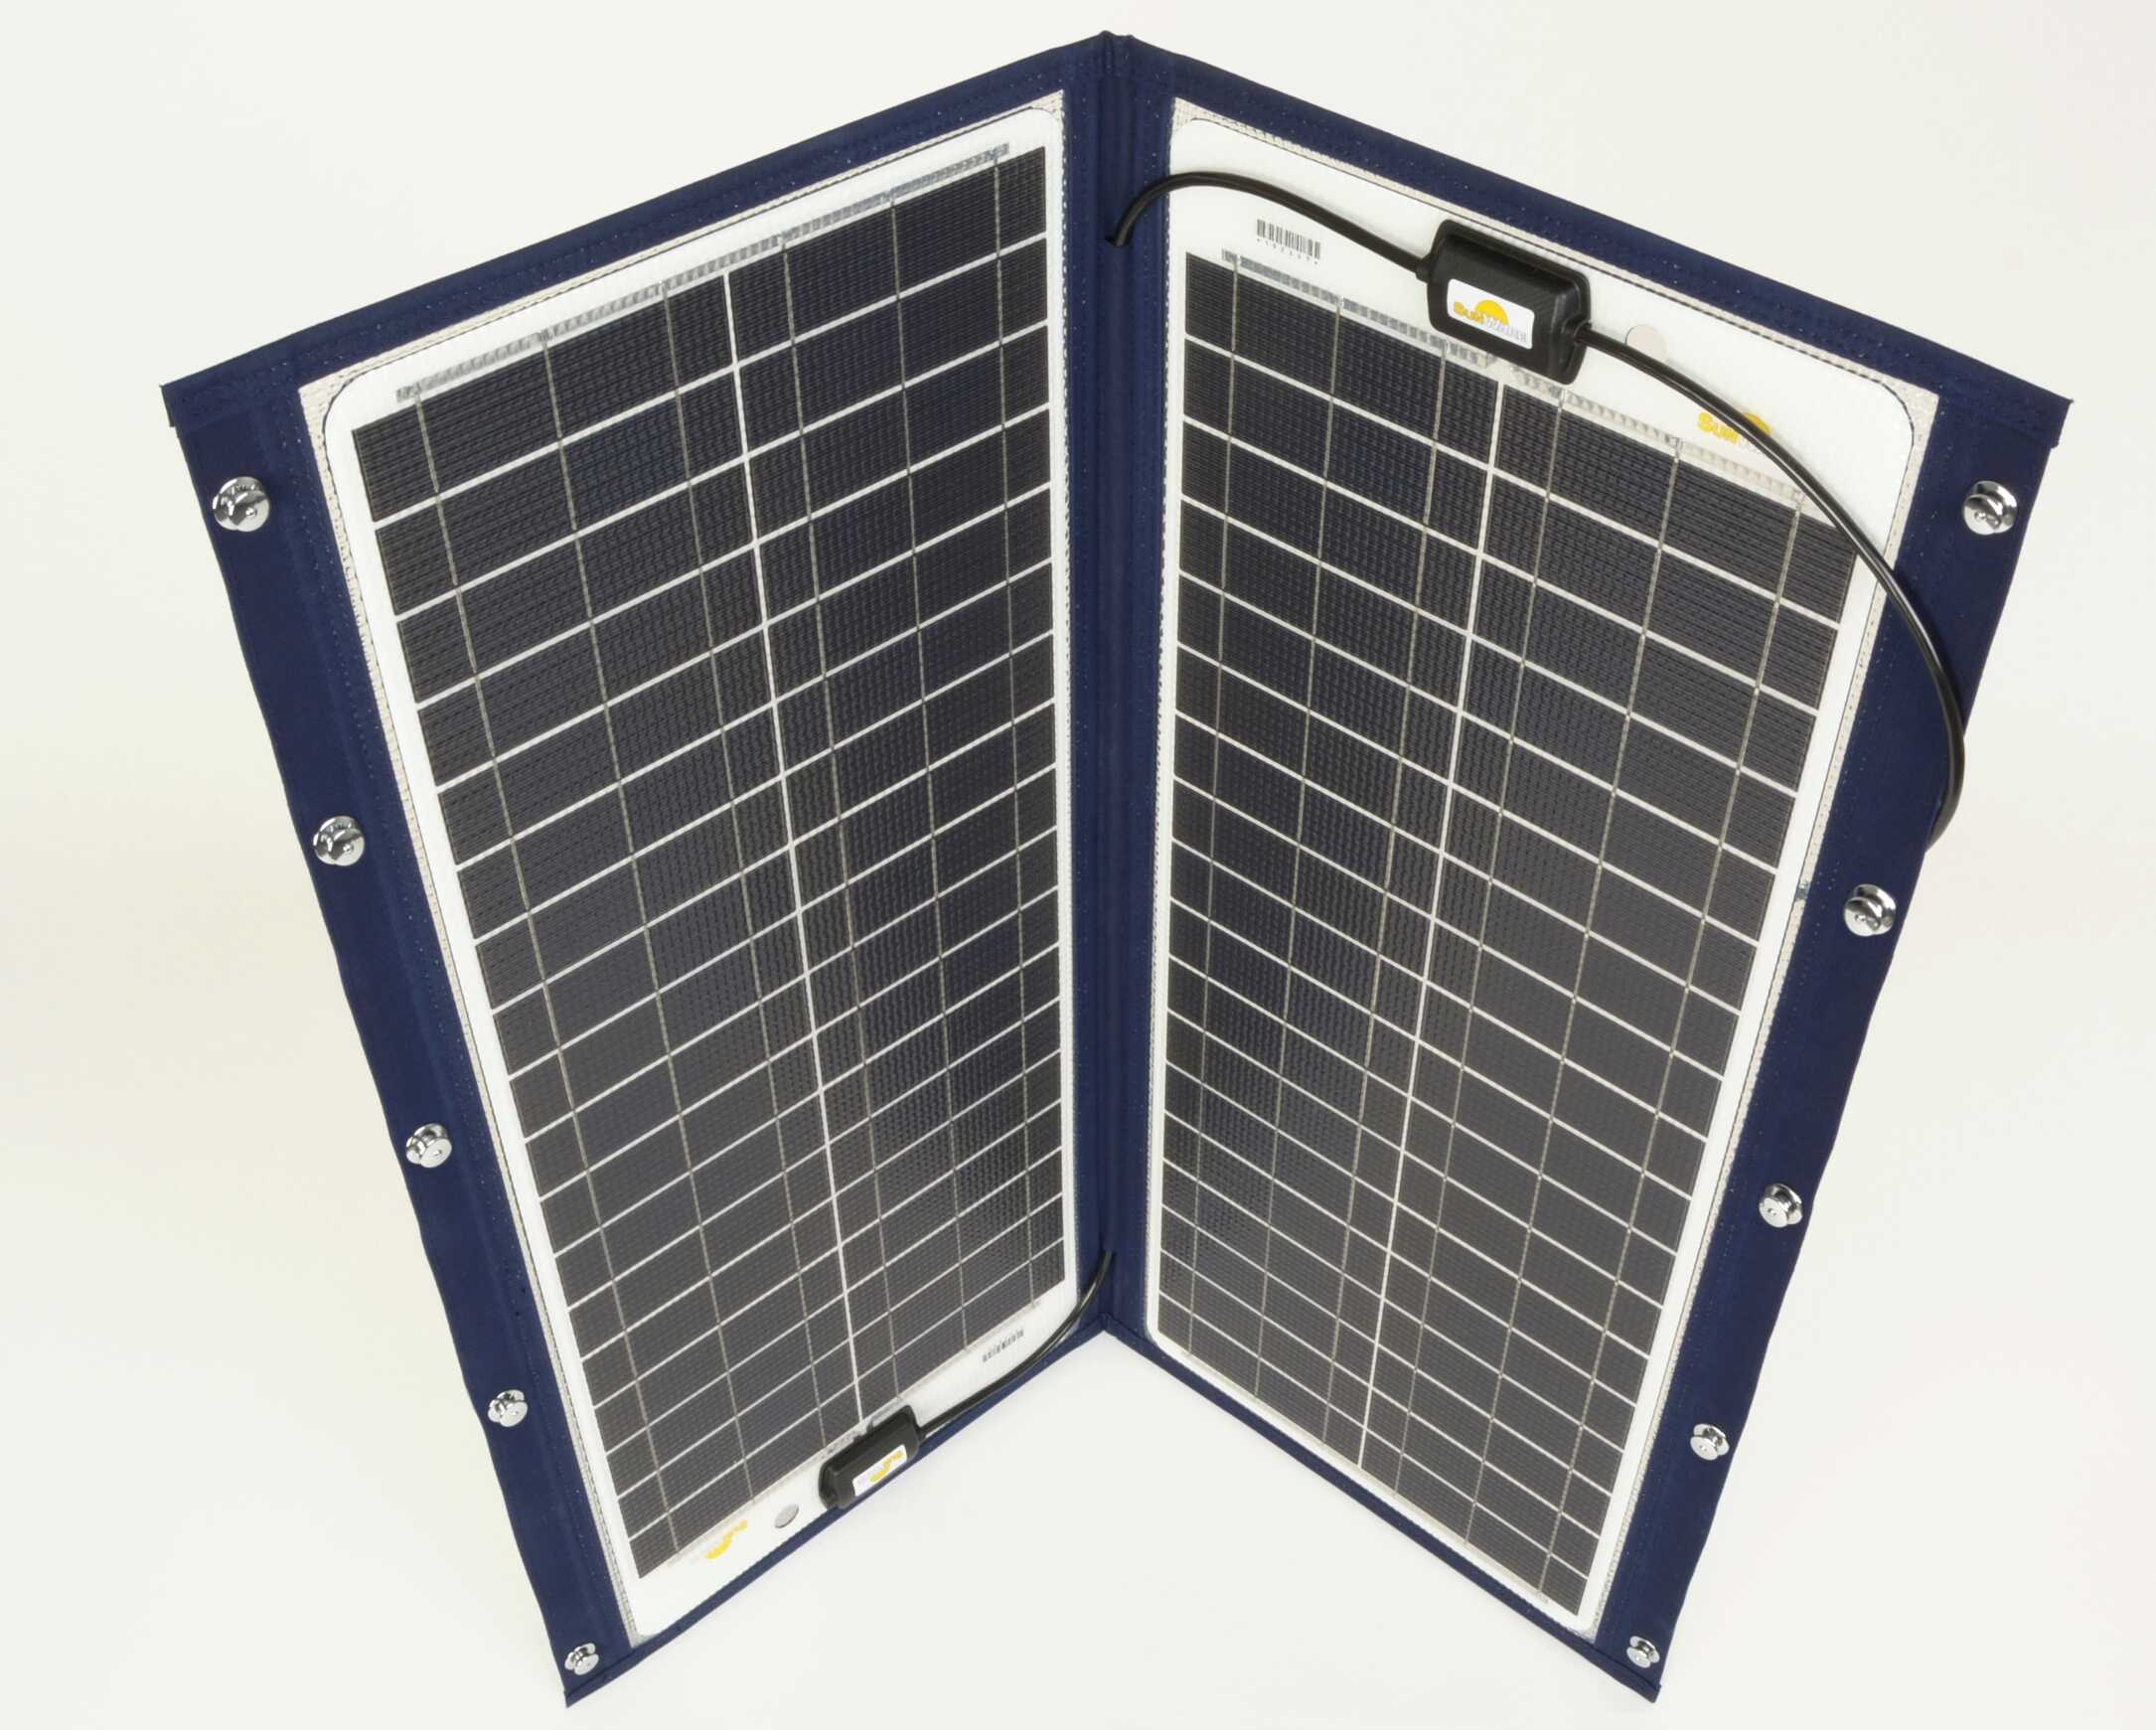 Hochleistungs-Solarmodul 12V / 24V kaufen ☀️ Top-Preis ab 131,07 €